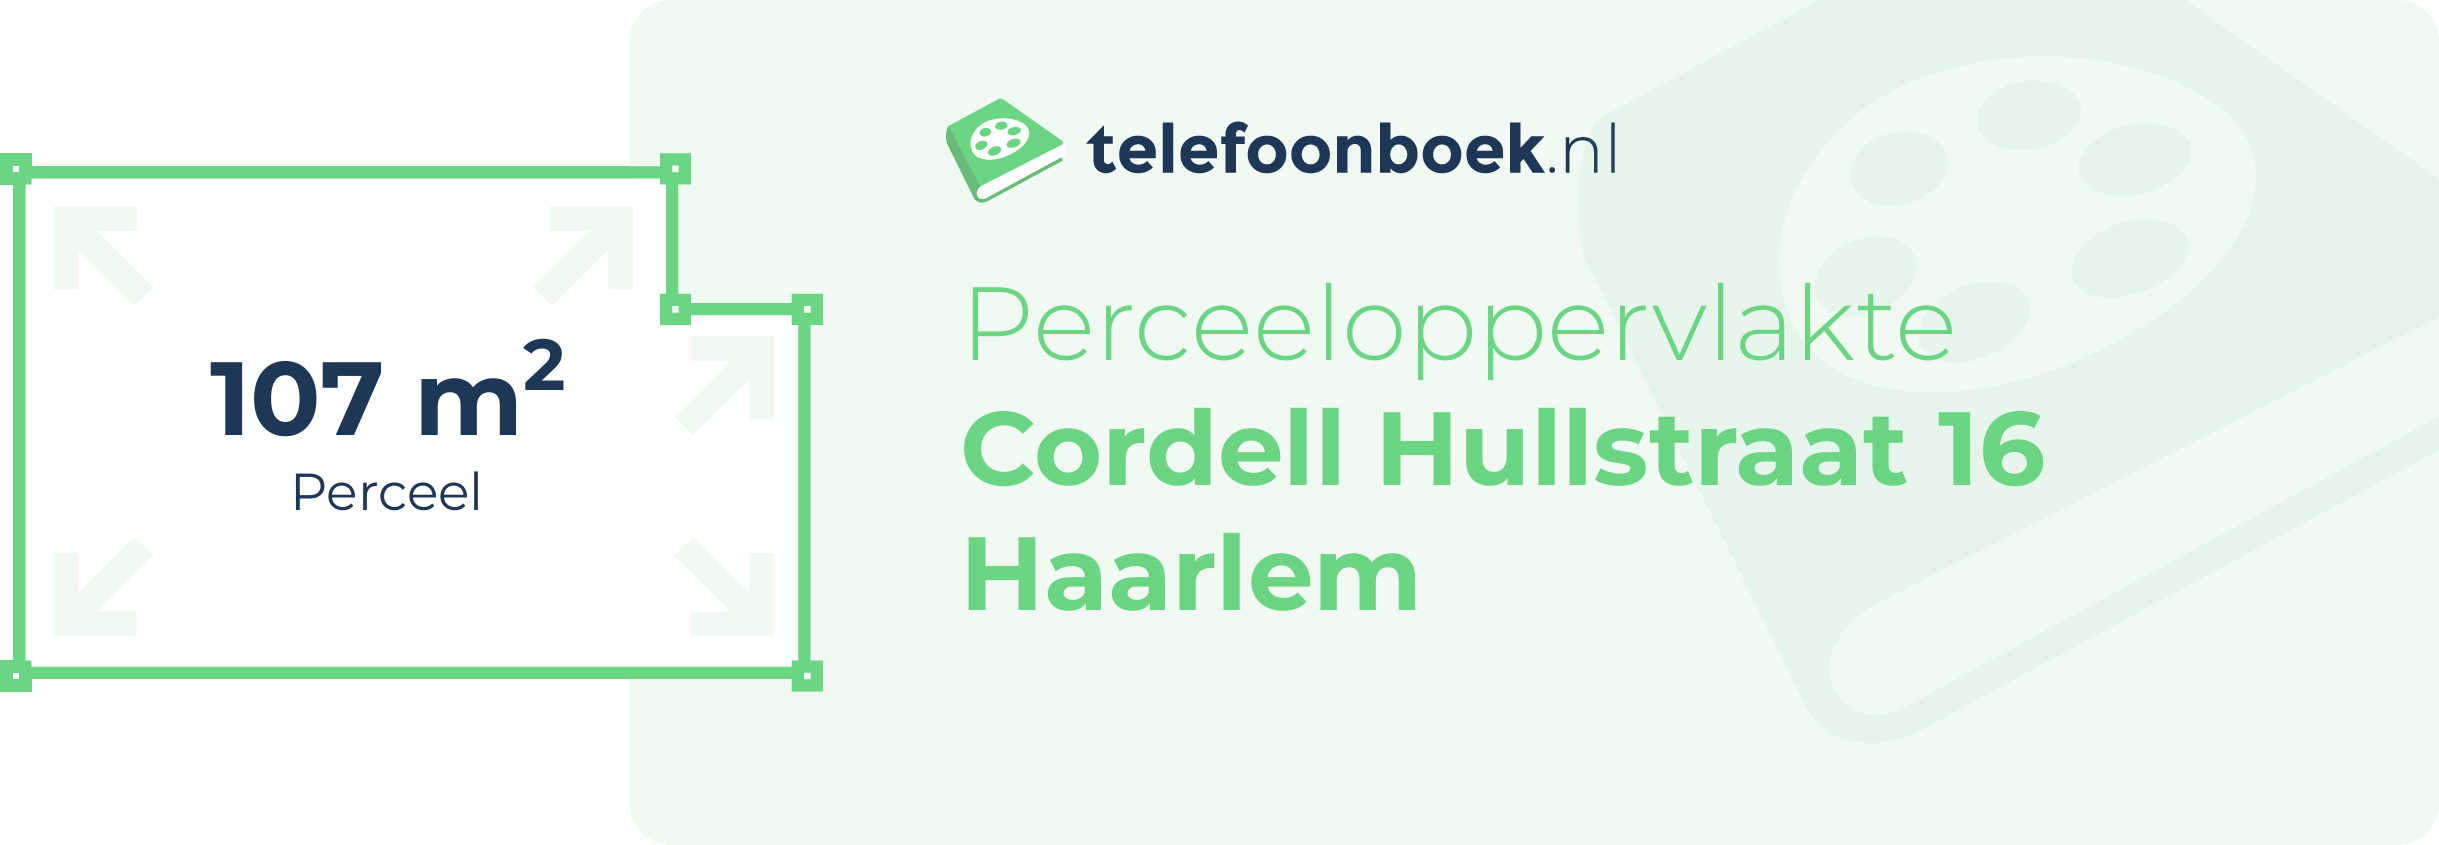 Perceeloppervlakte Cordell Hullstraat 16 Haarlem